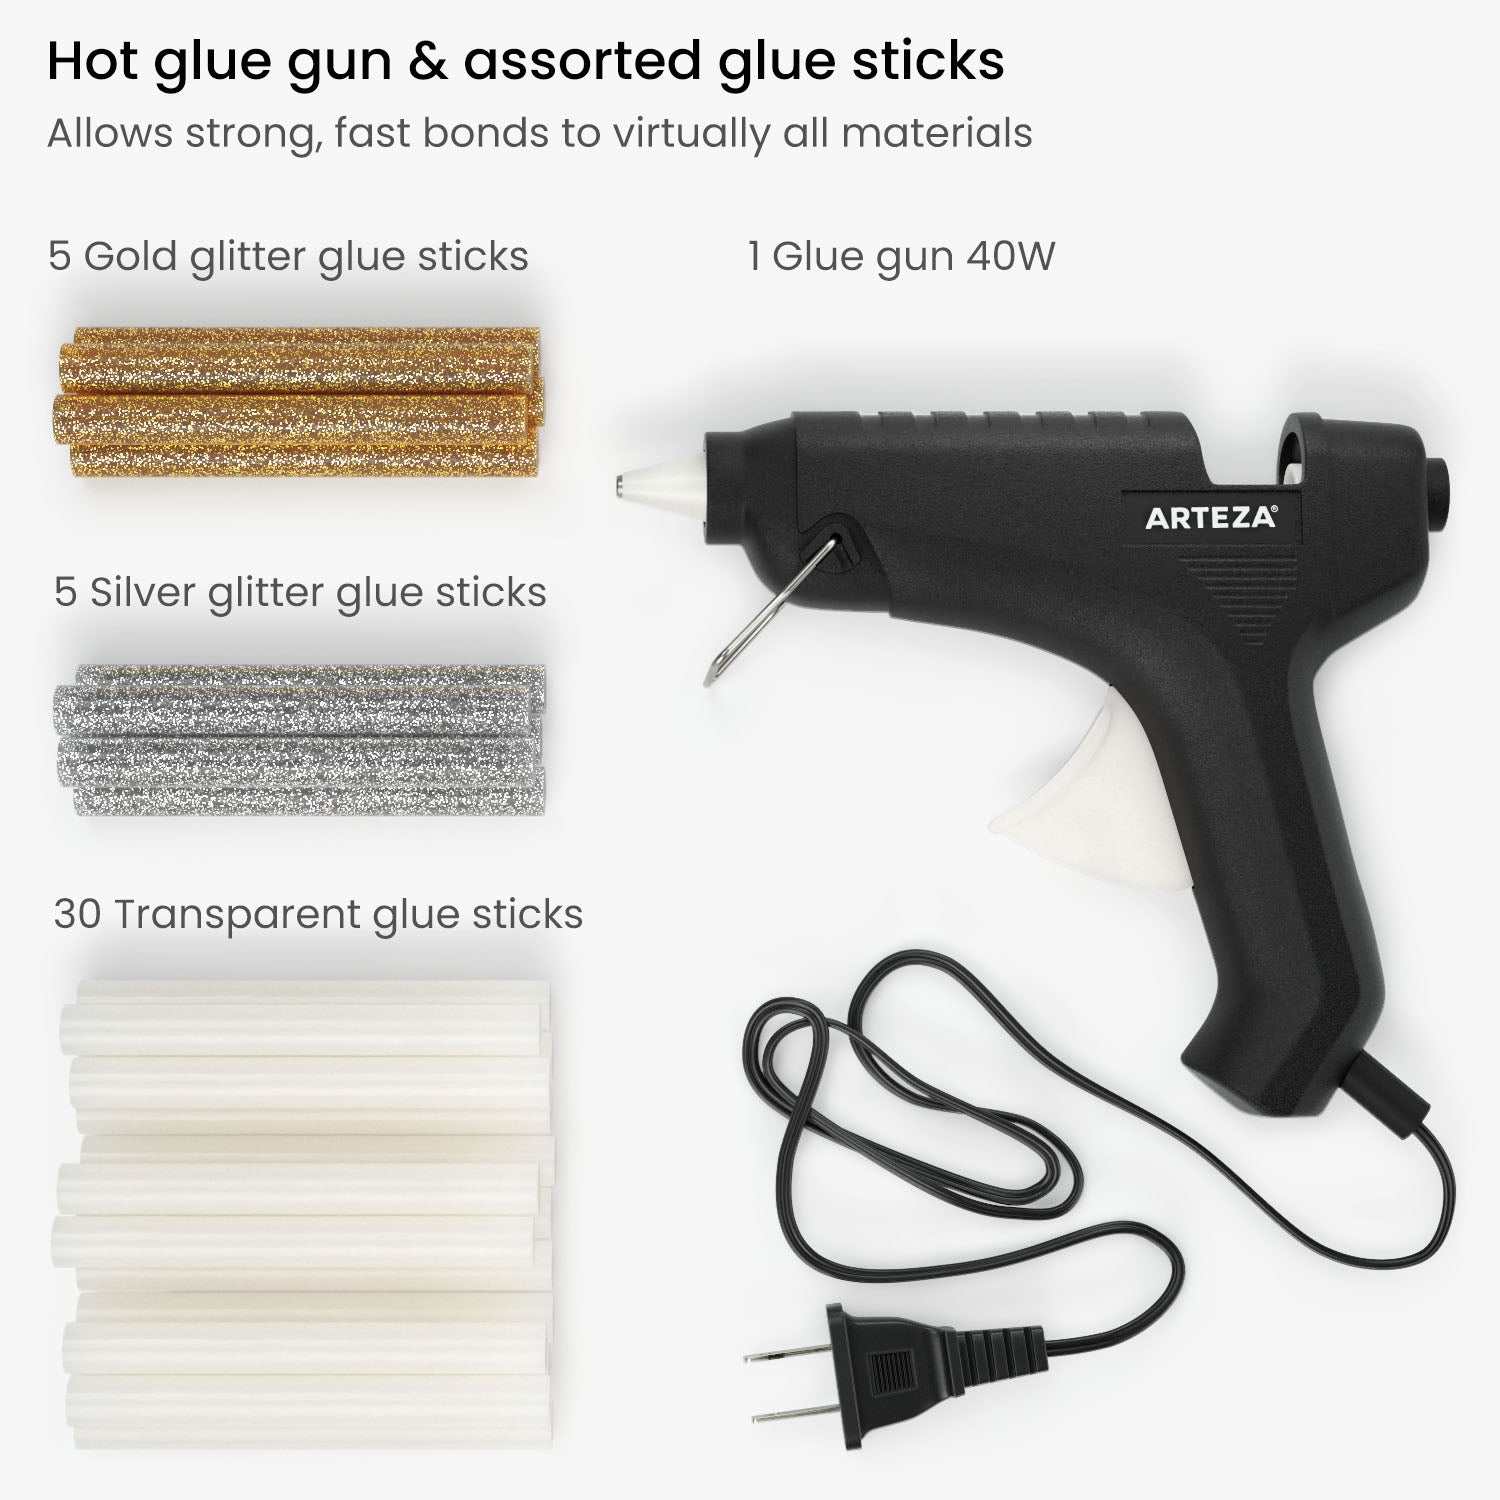 Clear Hot Glue Sticks, Mini Size (5/16 Diameter) – ARCH Art Supplies